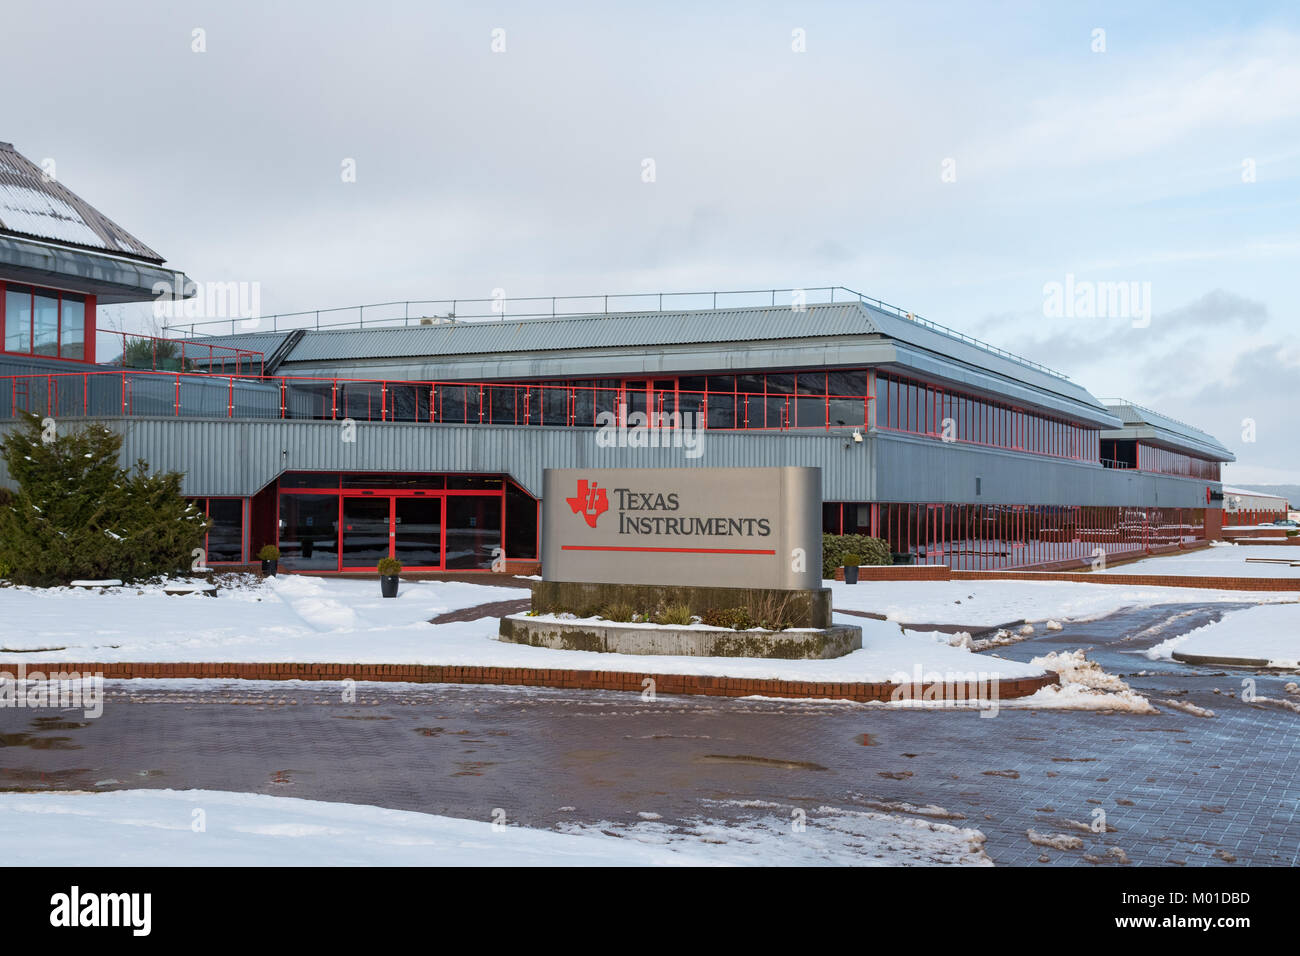 Texas Instruments Halbleiterfabrik, Gourock, Greenock, Schottland, Großbritannien Stockfoto